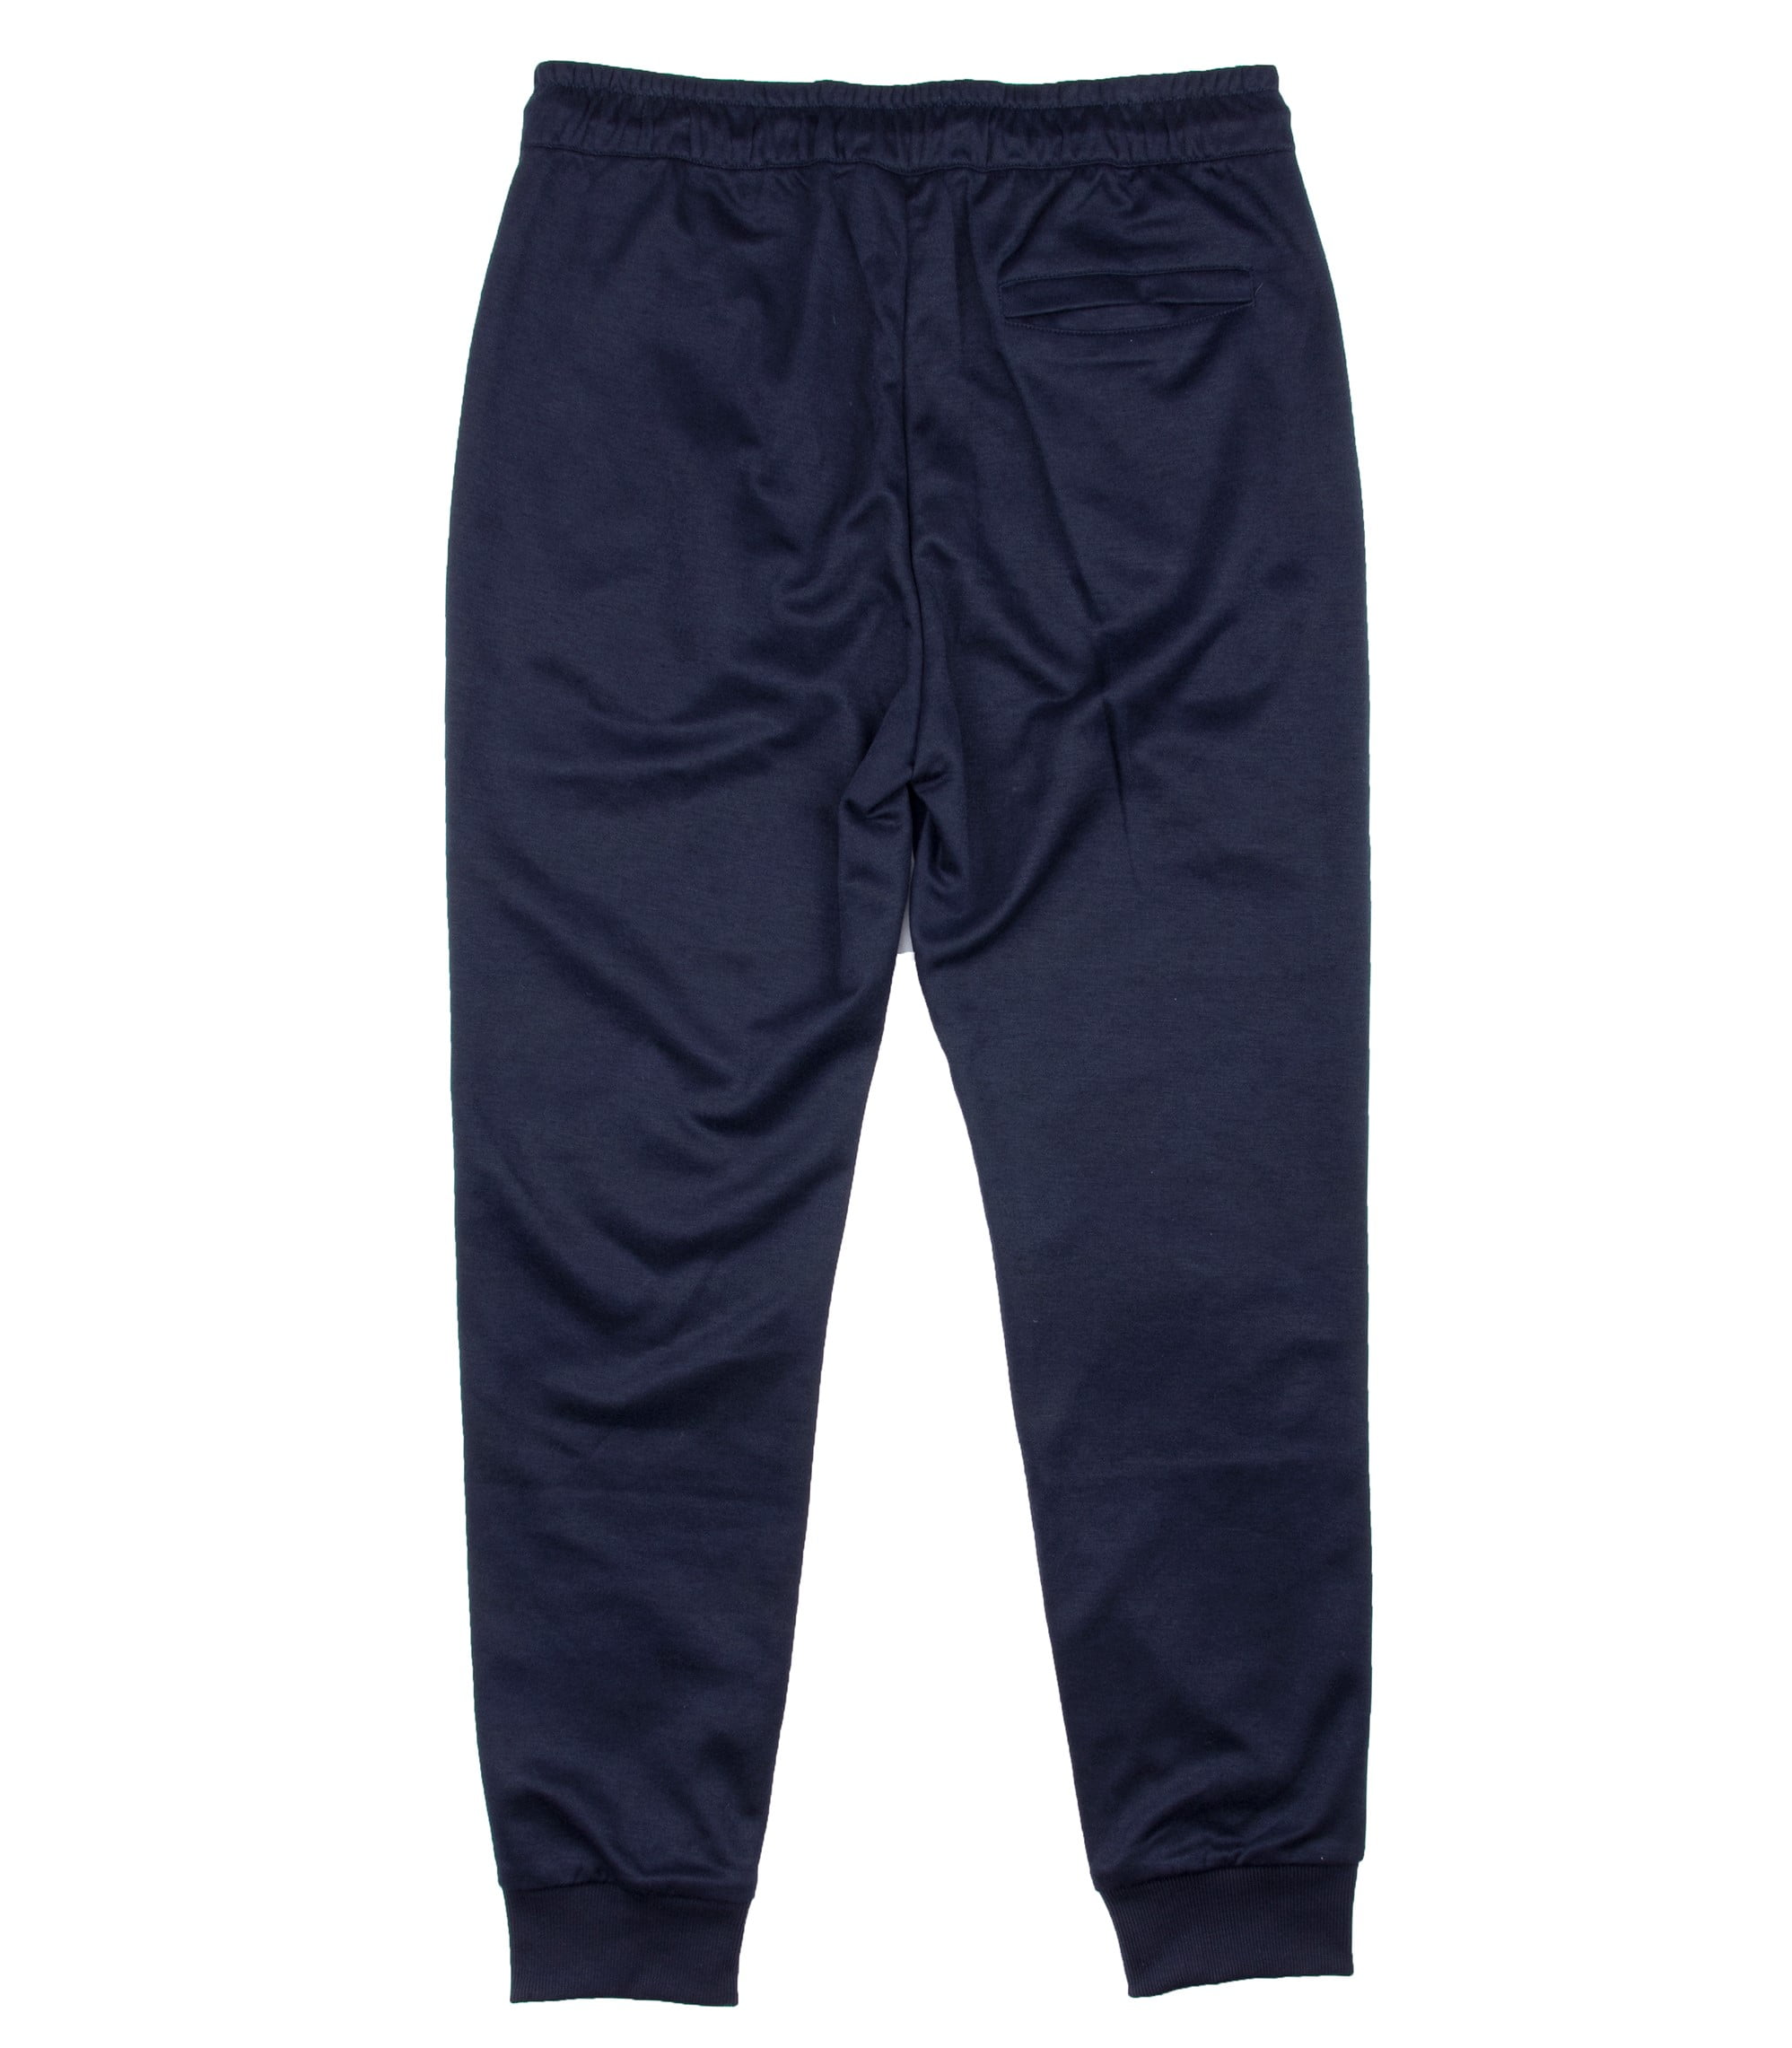 Men's Sweatpants - Navy - Community Clothing